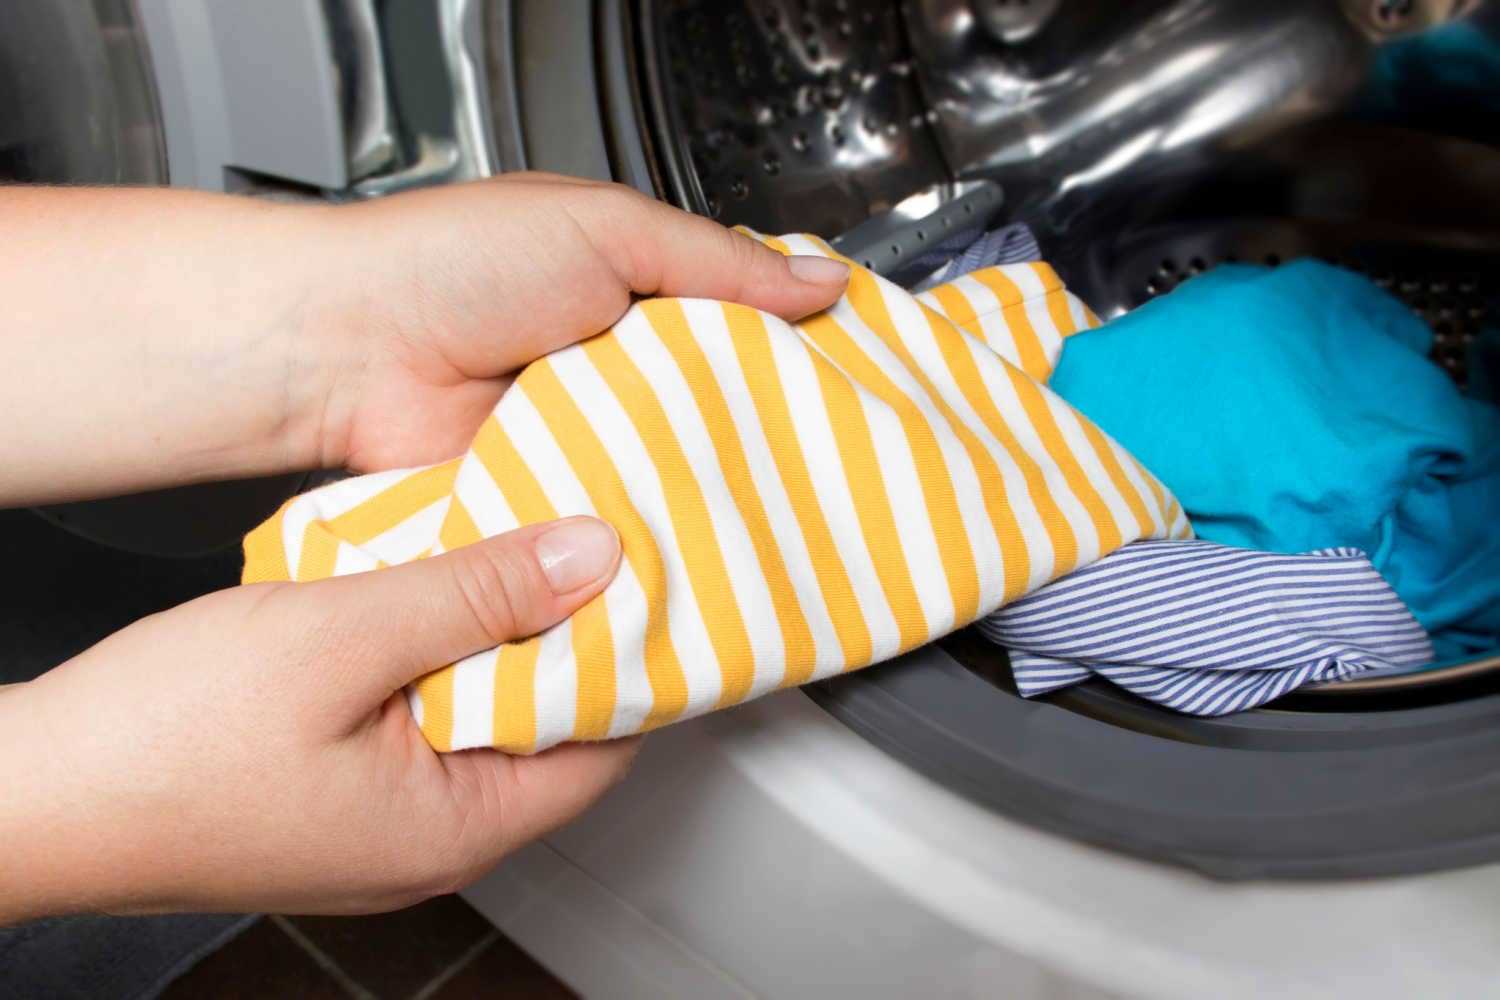 prewash clothe diaper before use.